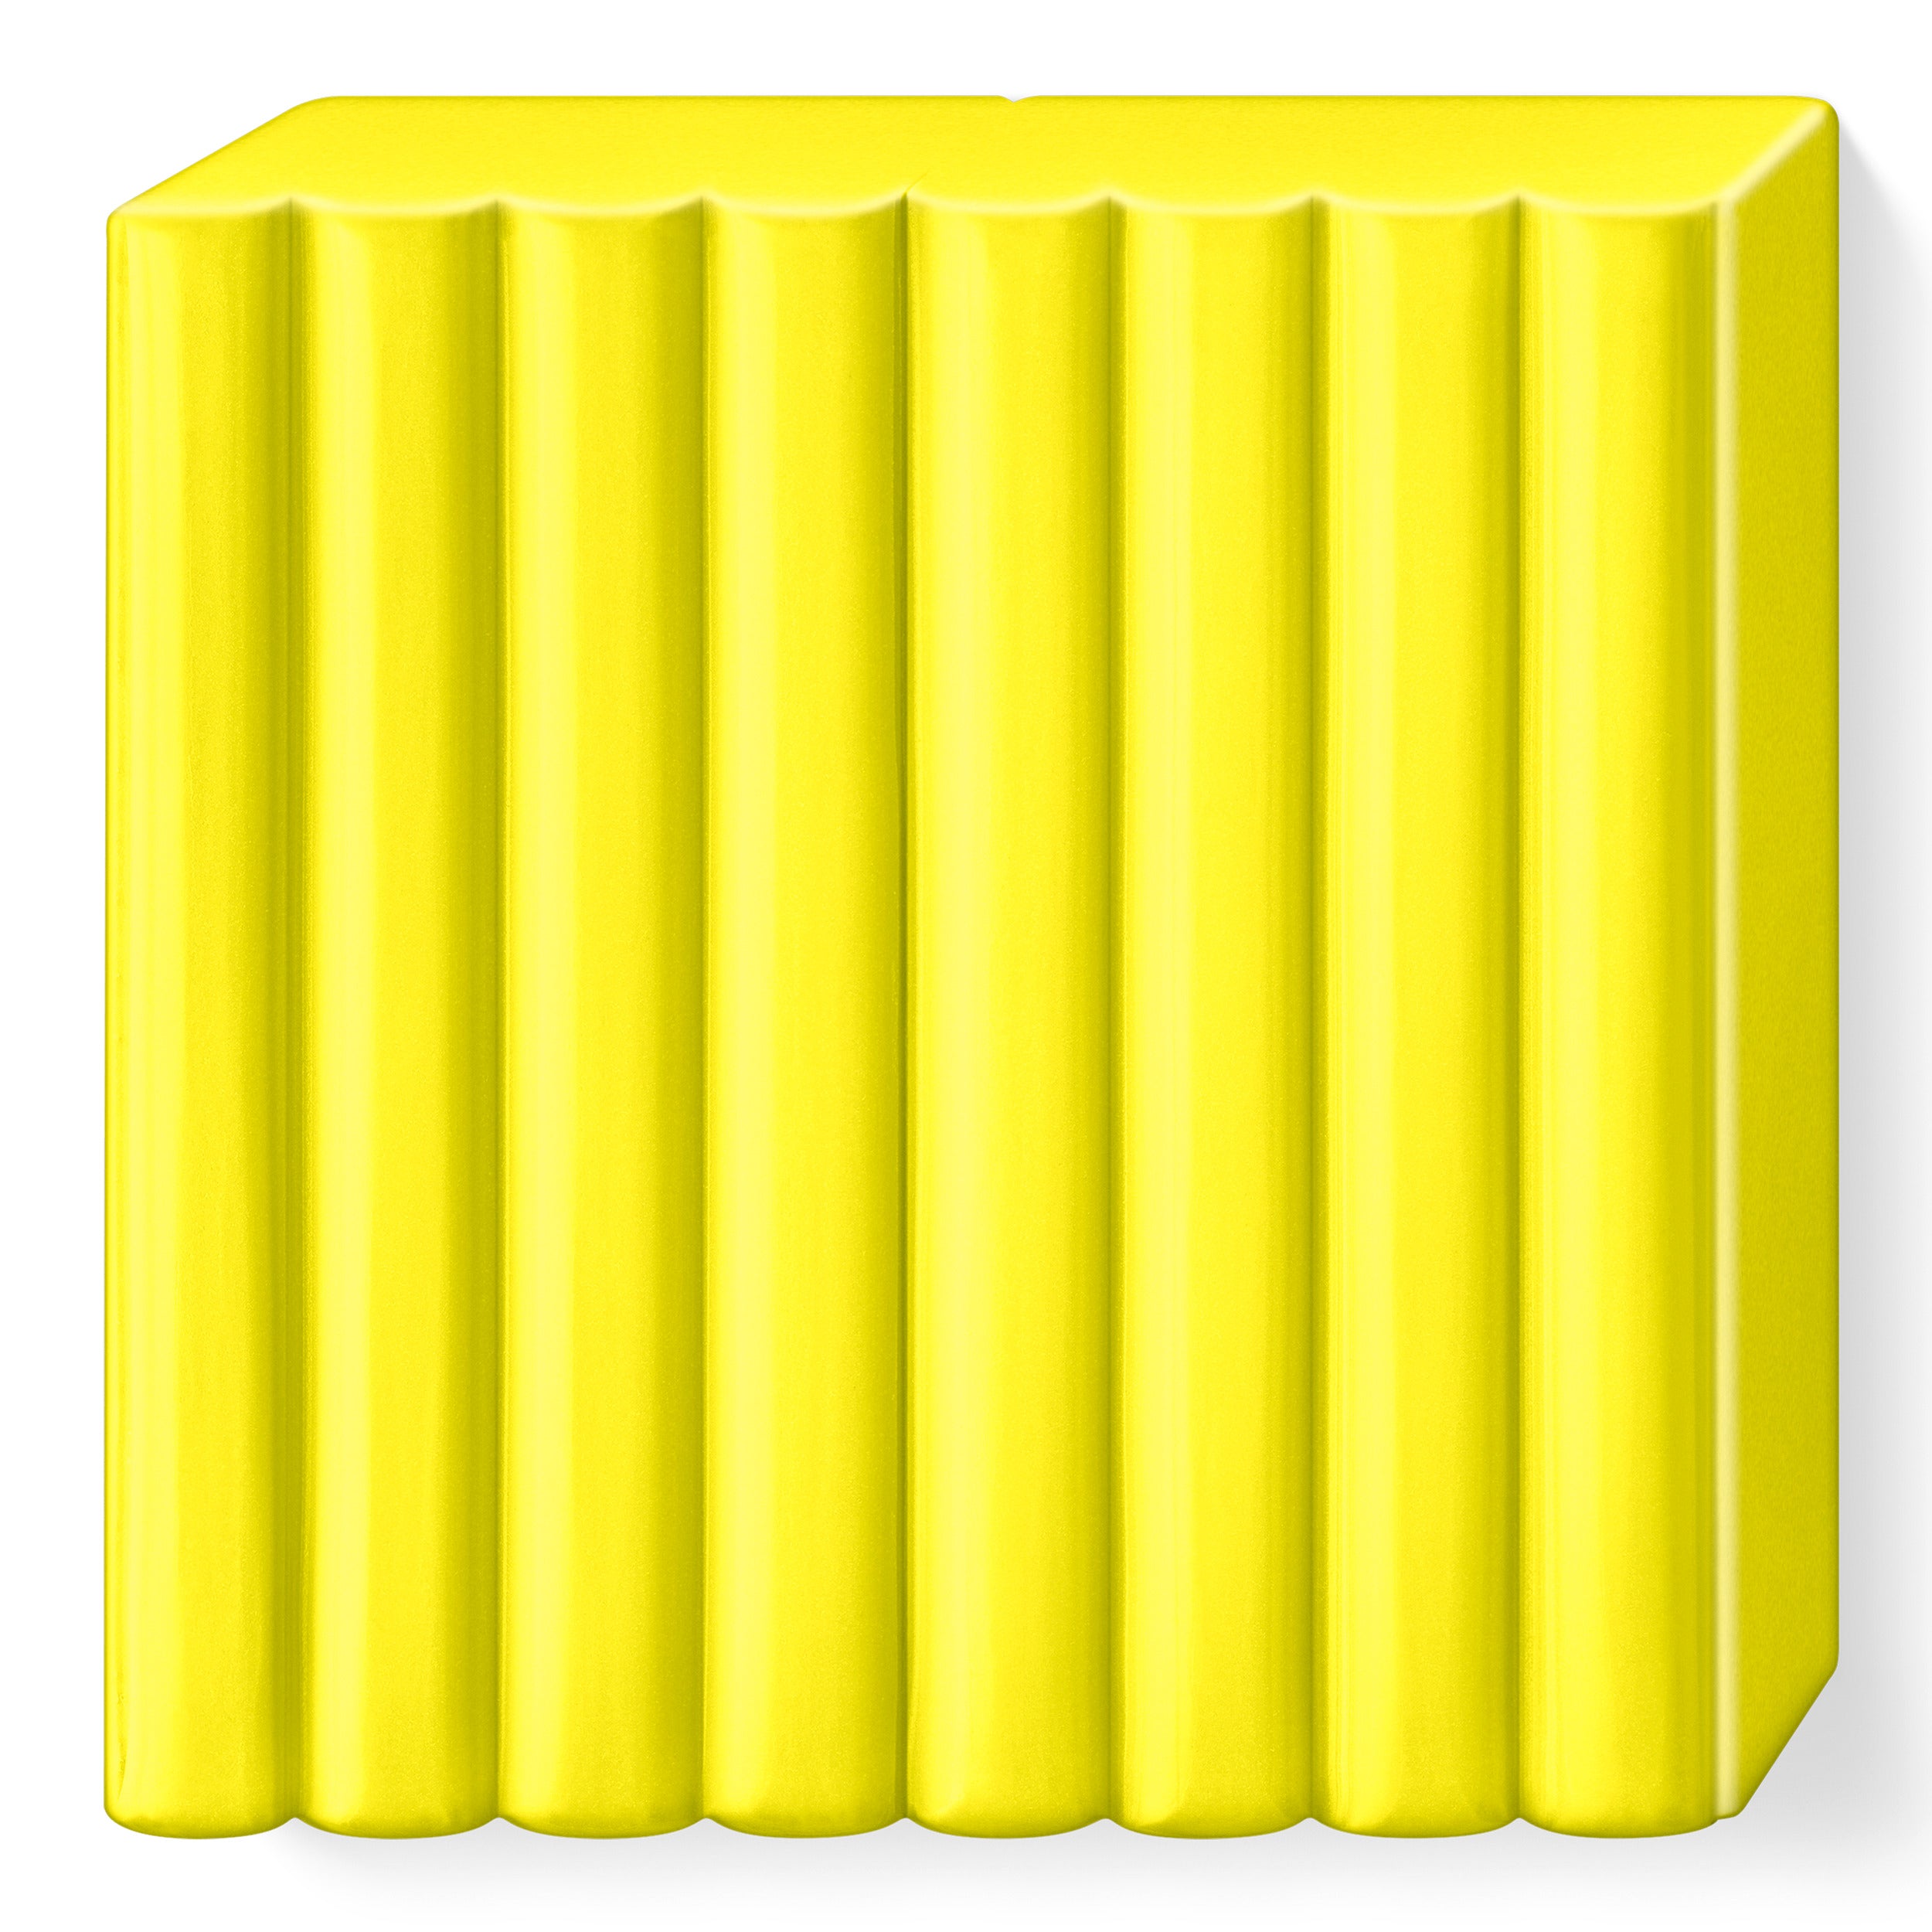 Fimo Soft Polymer Clay Standard Block 57g (2oz) - Lemon